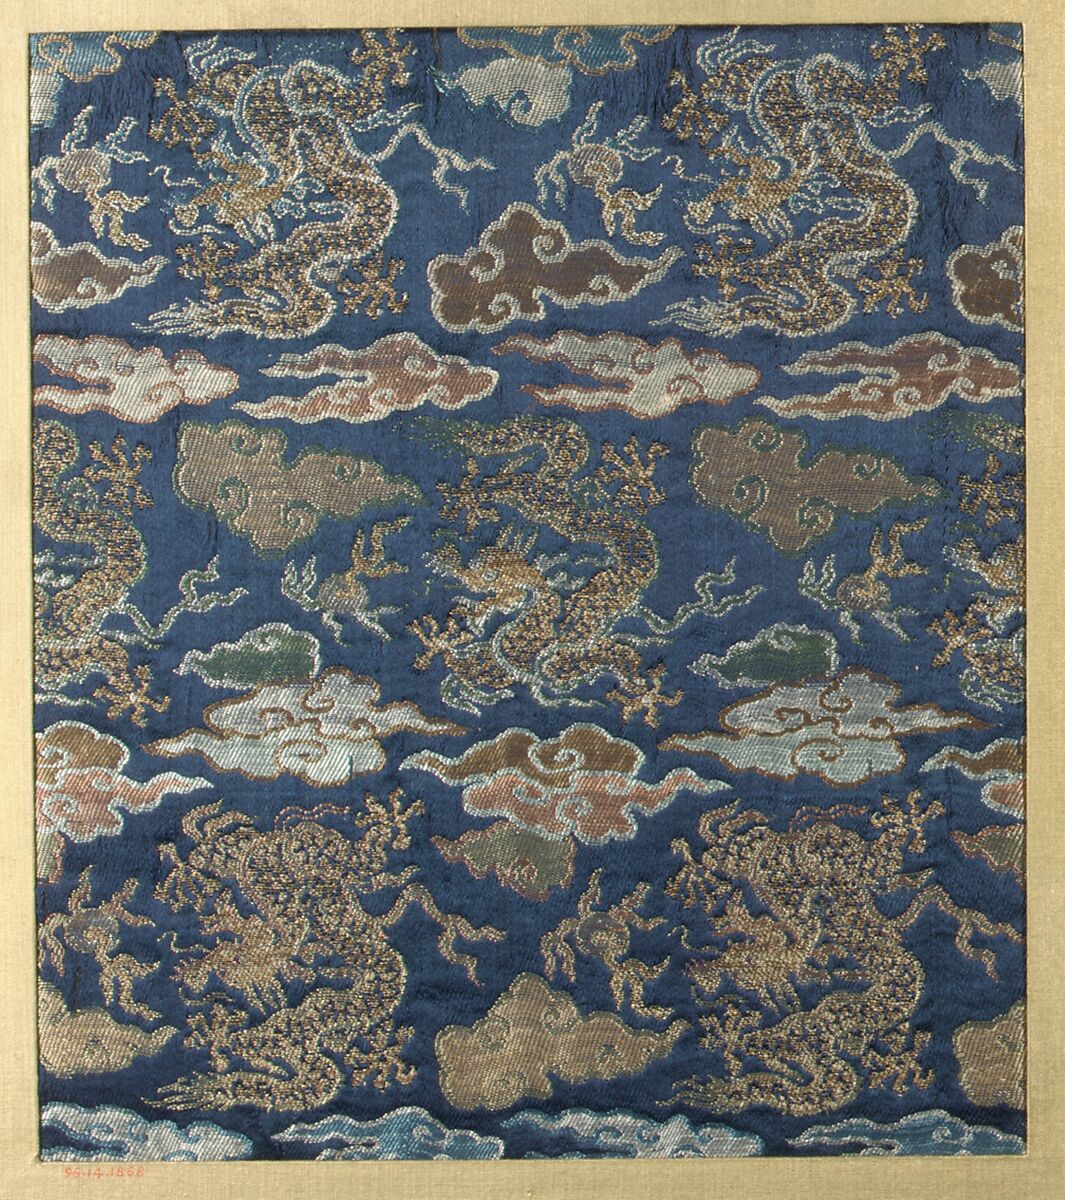 Piece, Silk, China 